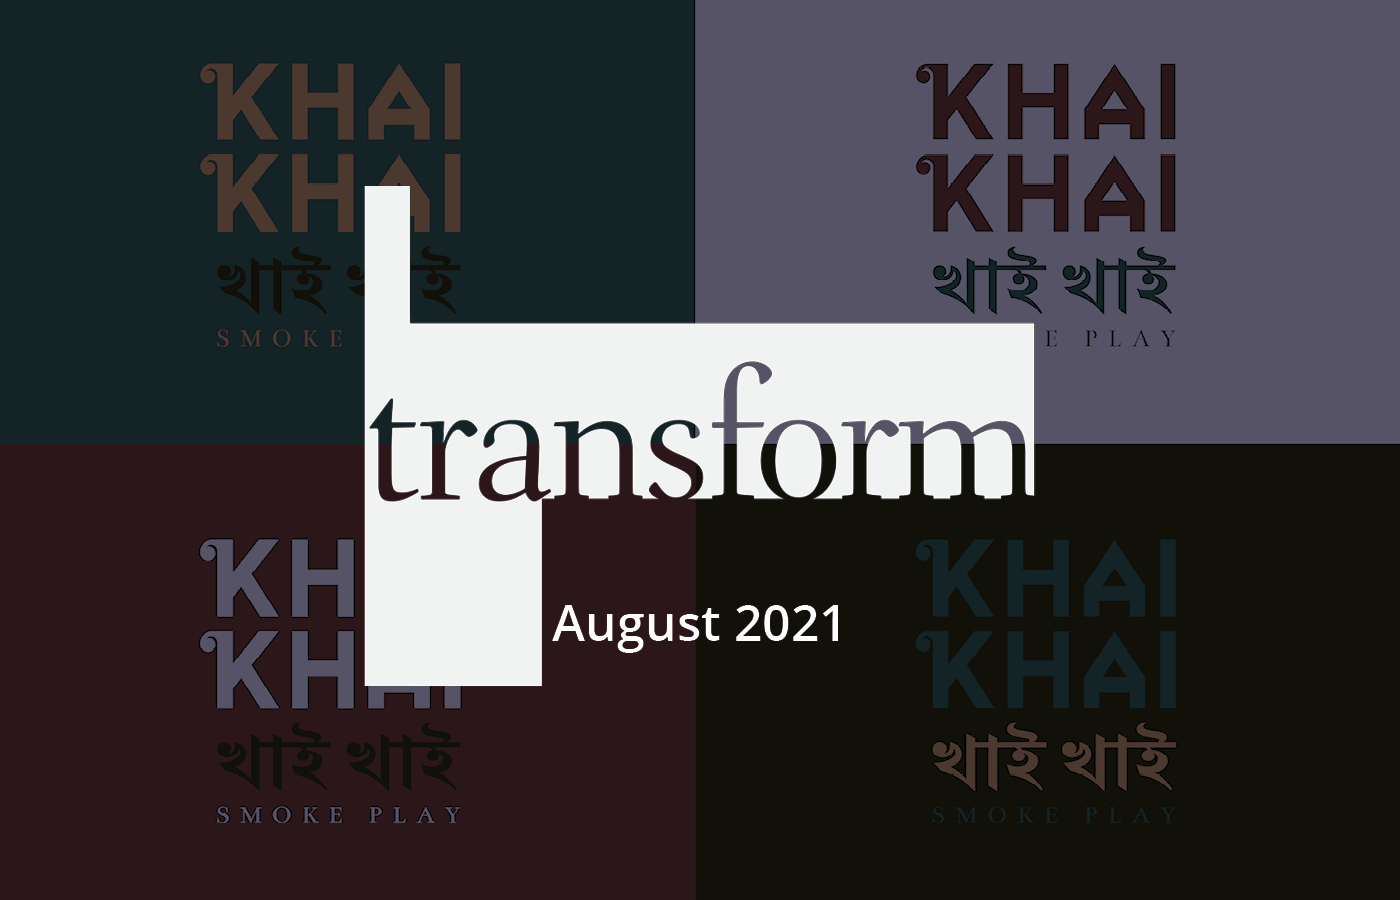 Transform 2021